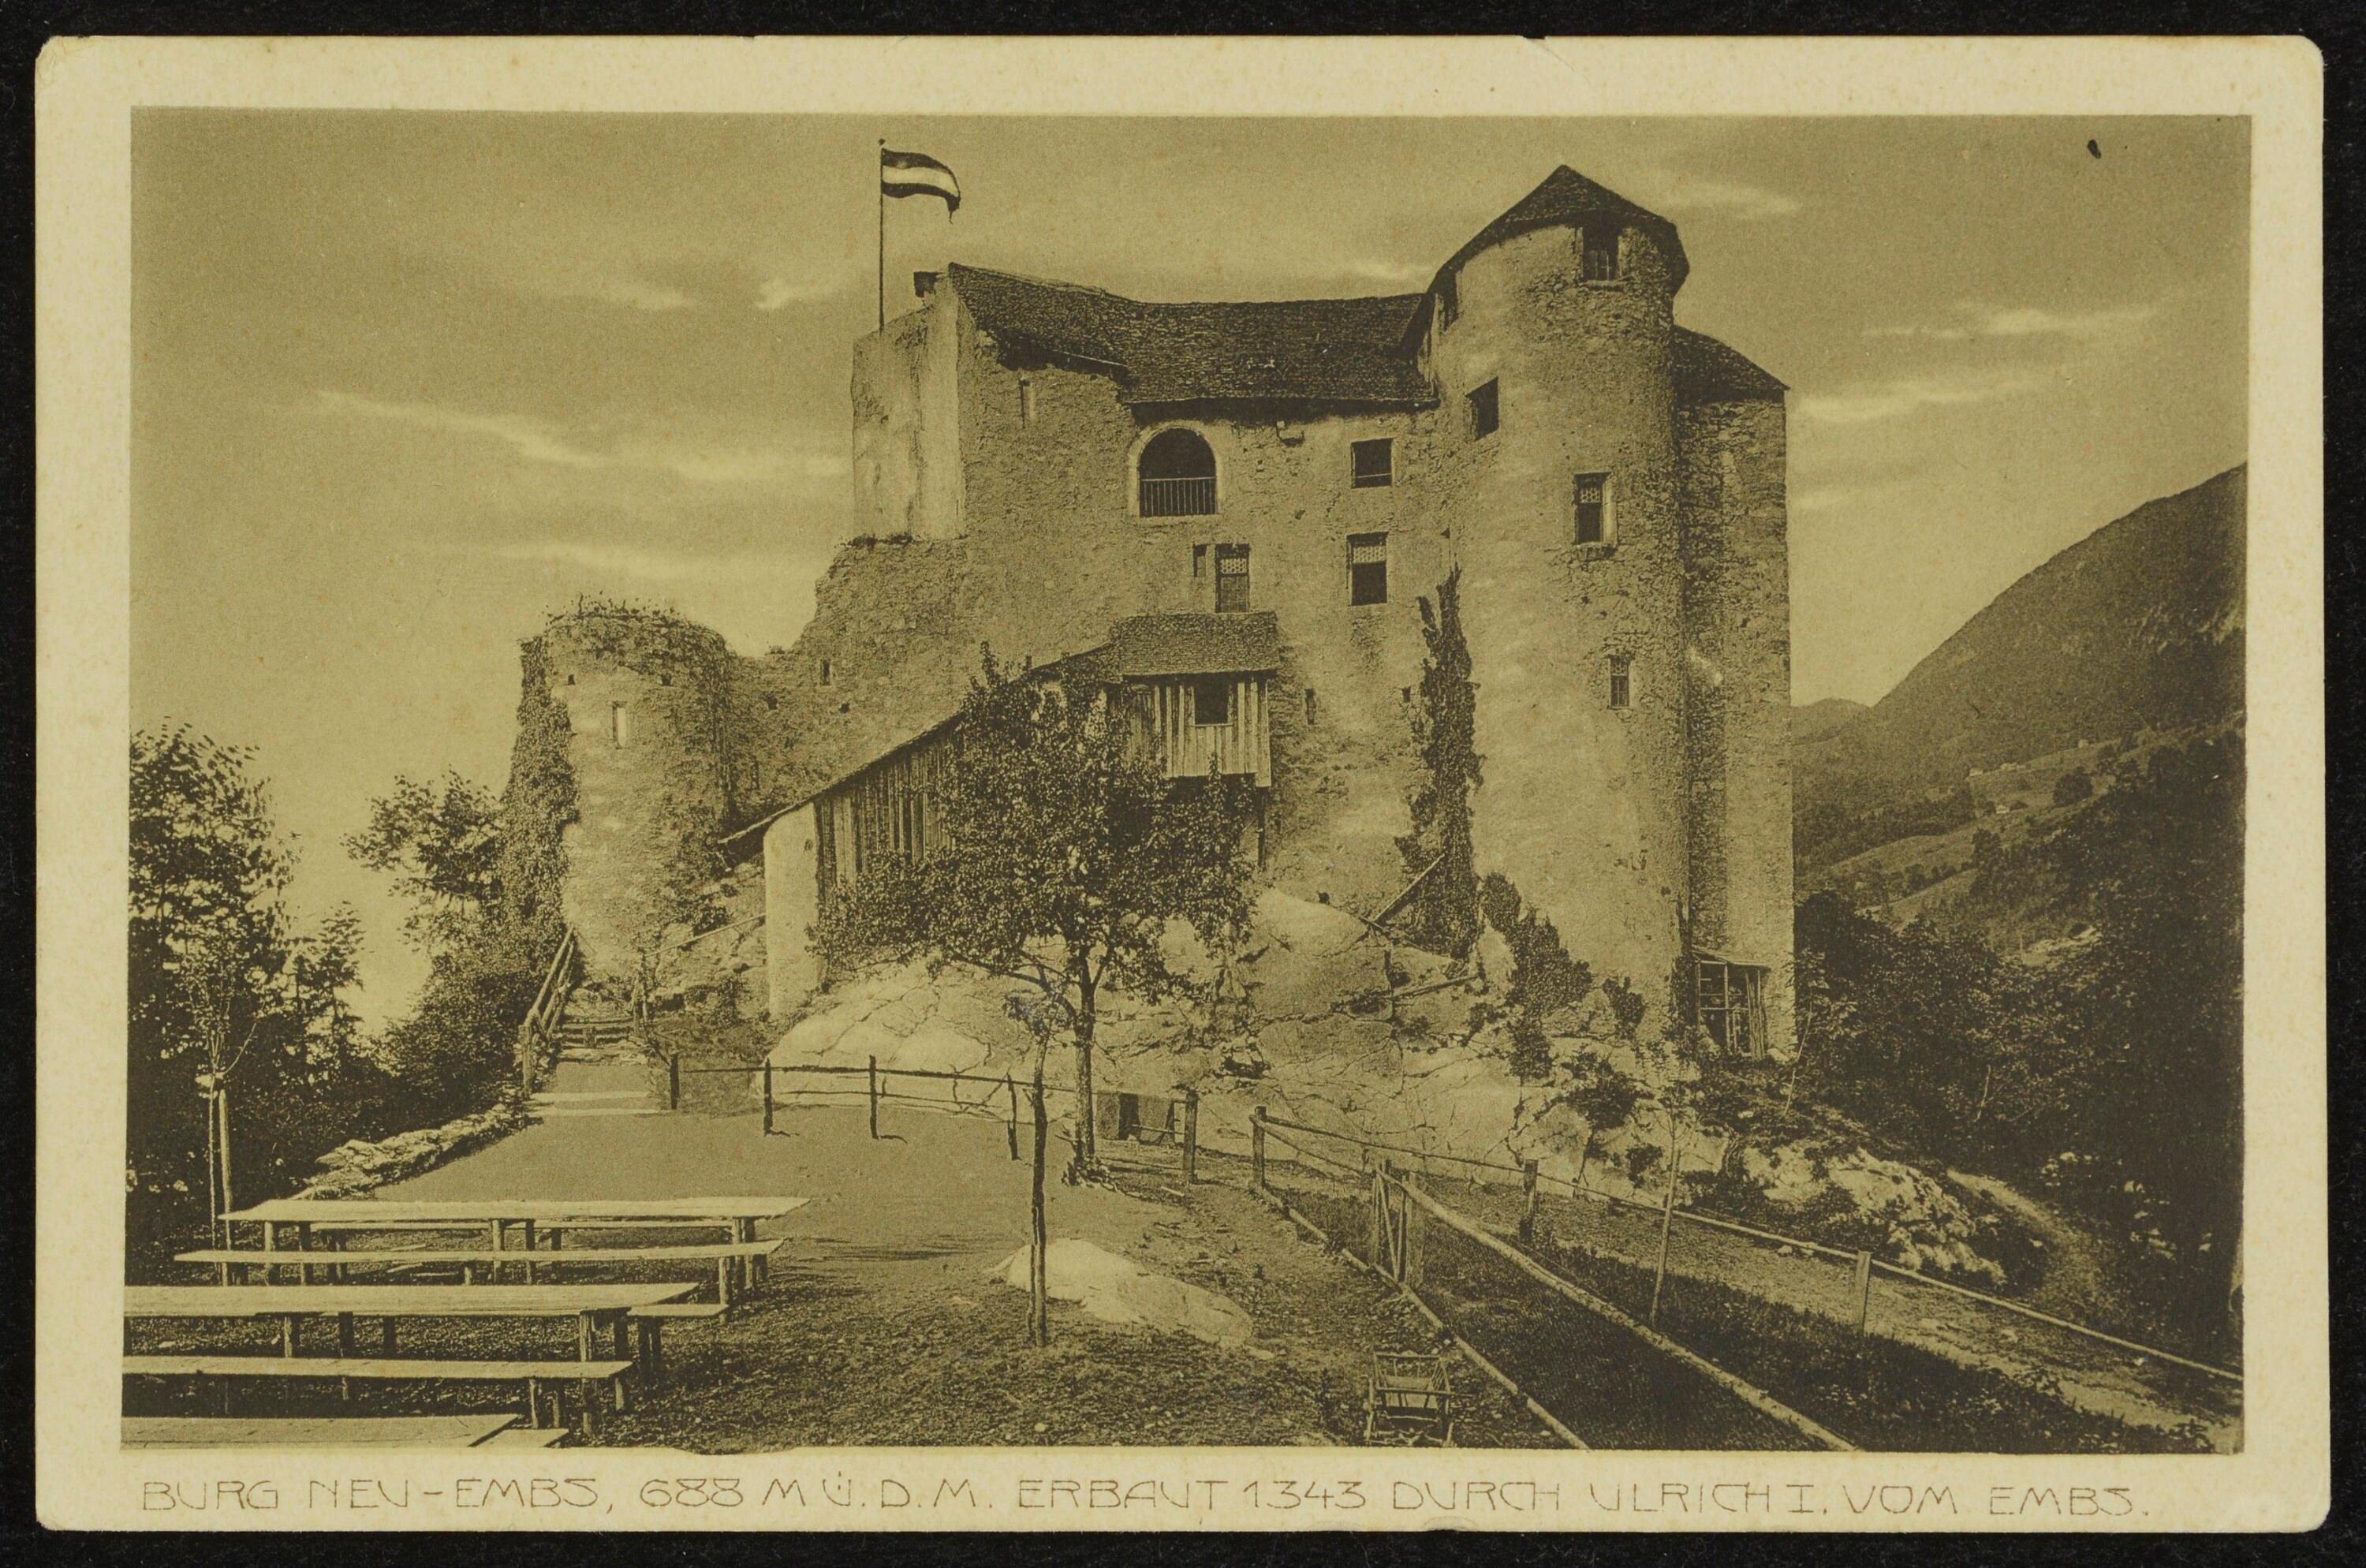 [Hohenems] Burg Neu-Embs, 688 m. ü. d. M. erbaut 1343 durch Ulrich I. vom Embs></div>


    <hr>
    <div class=